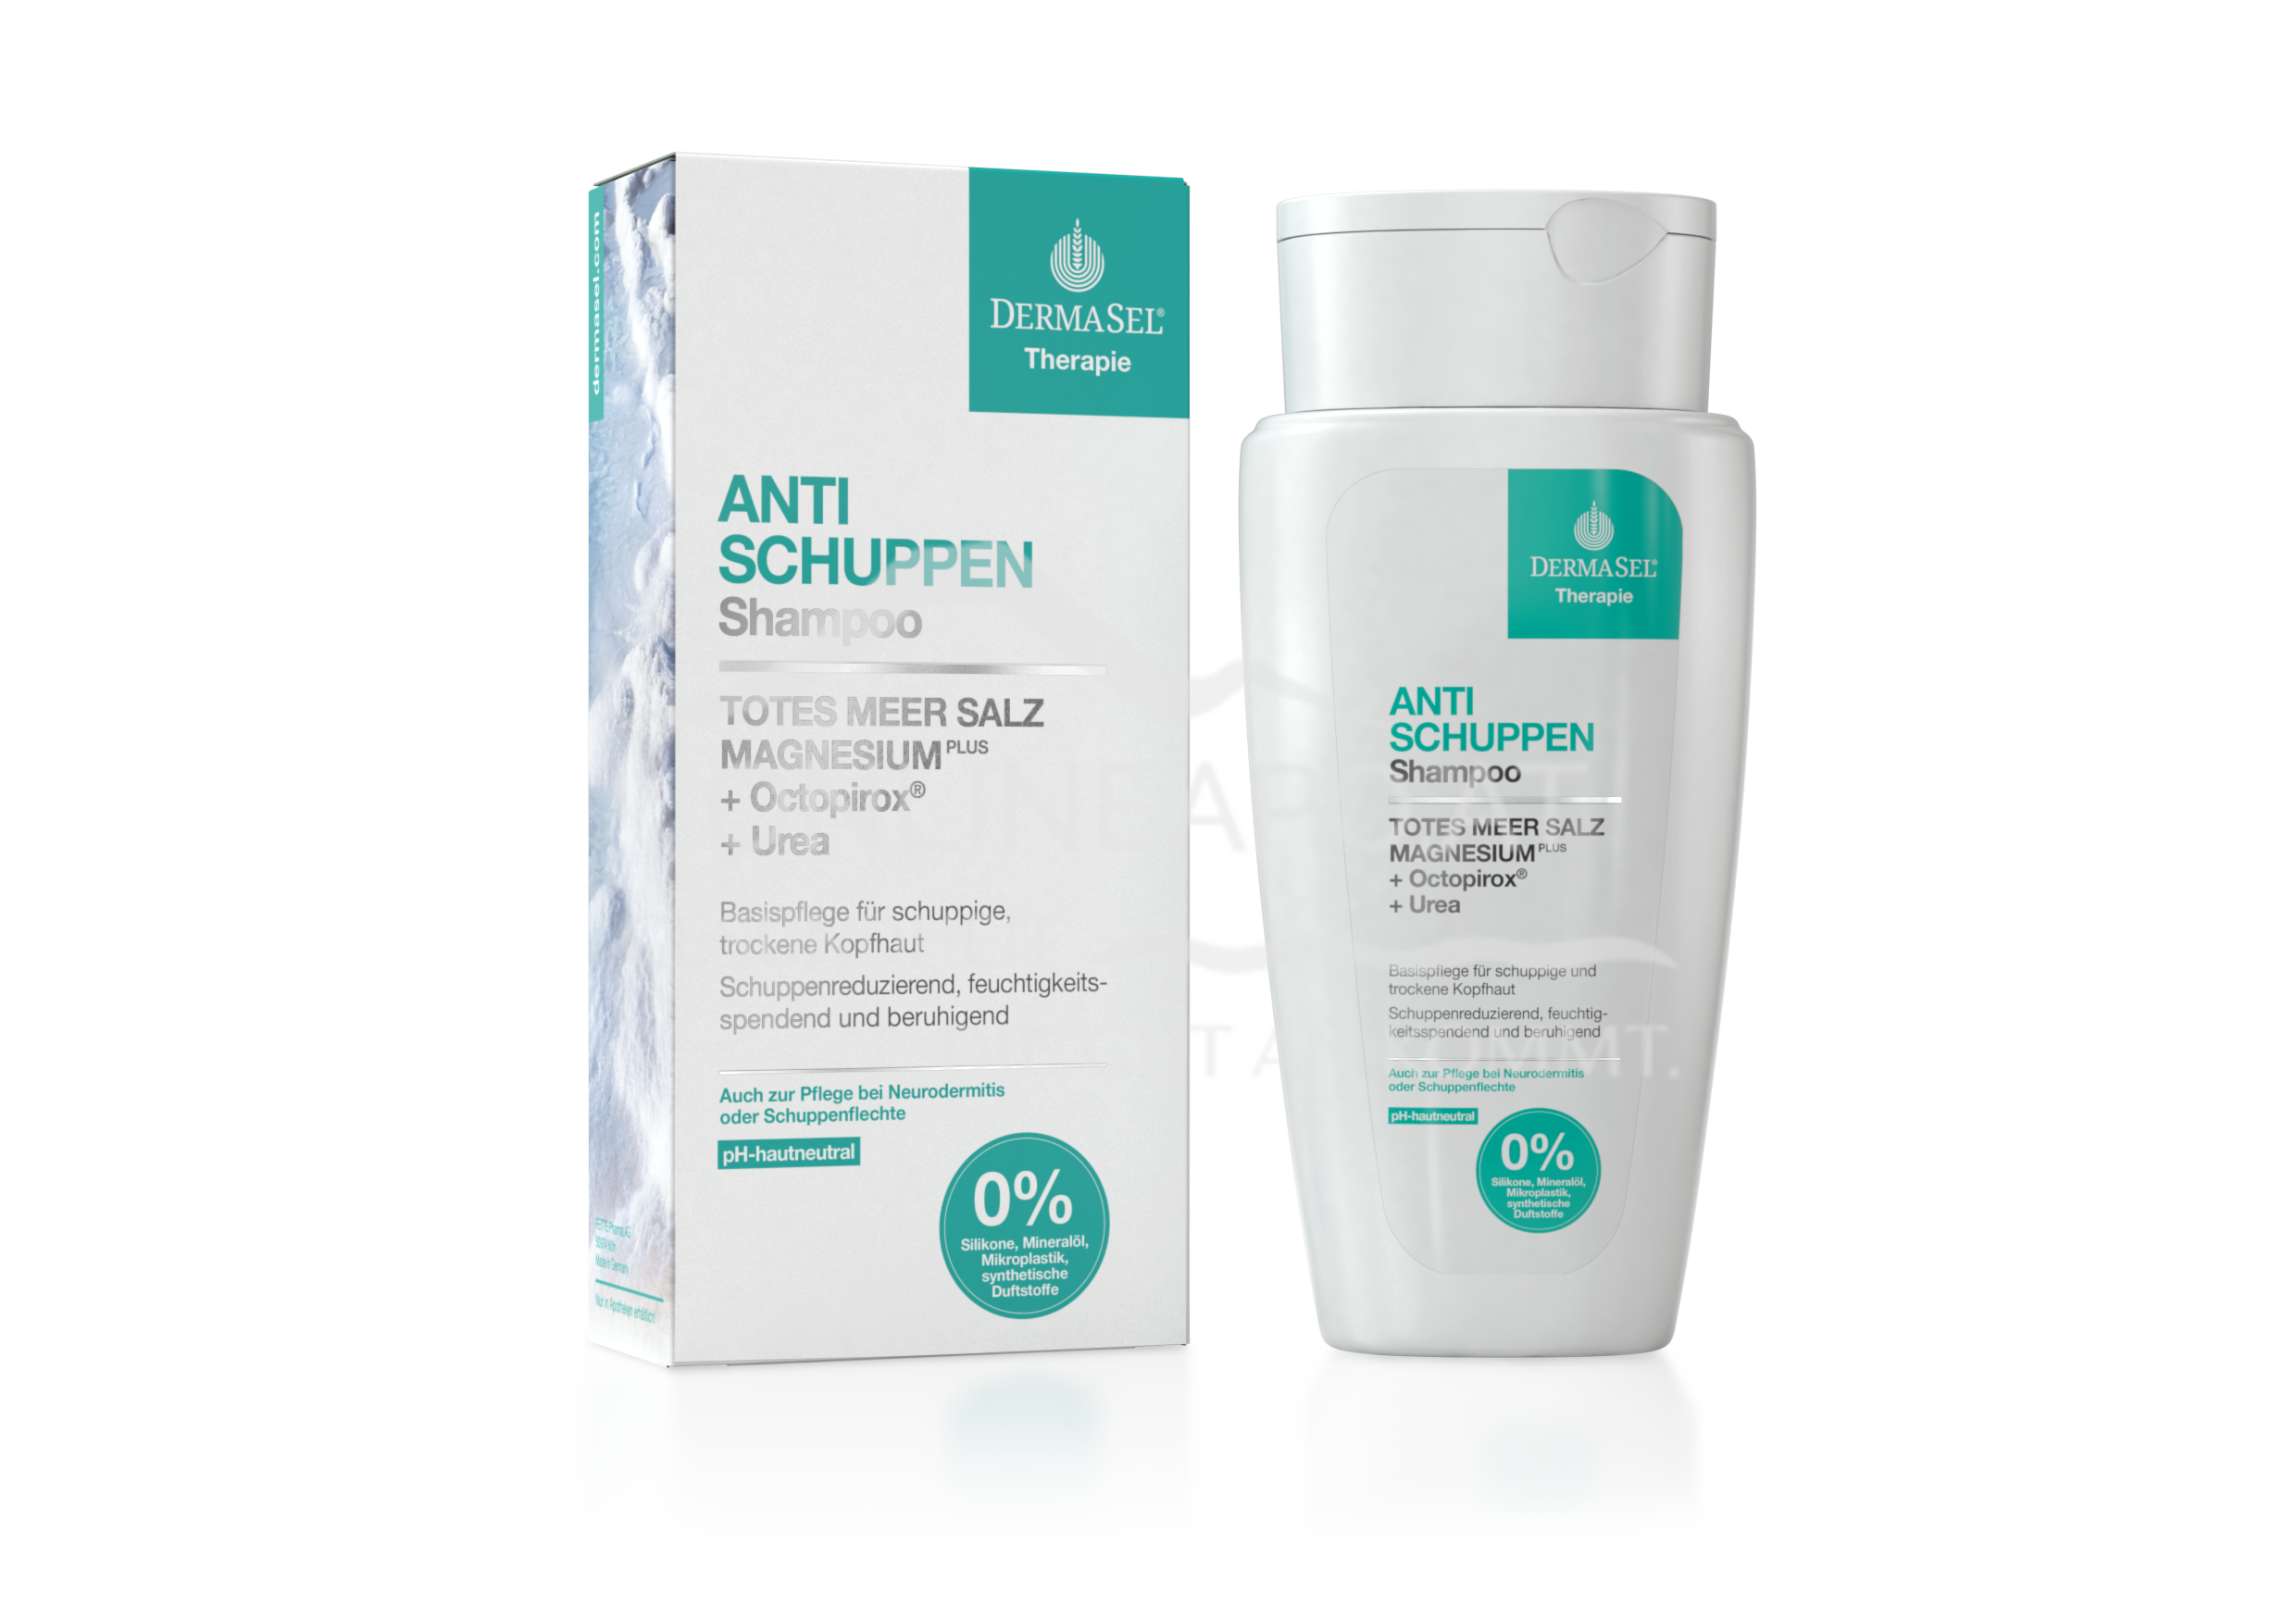 DermaSel® Therapie Anti Schuppen Shampoo